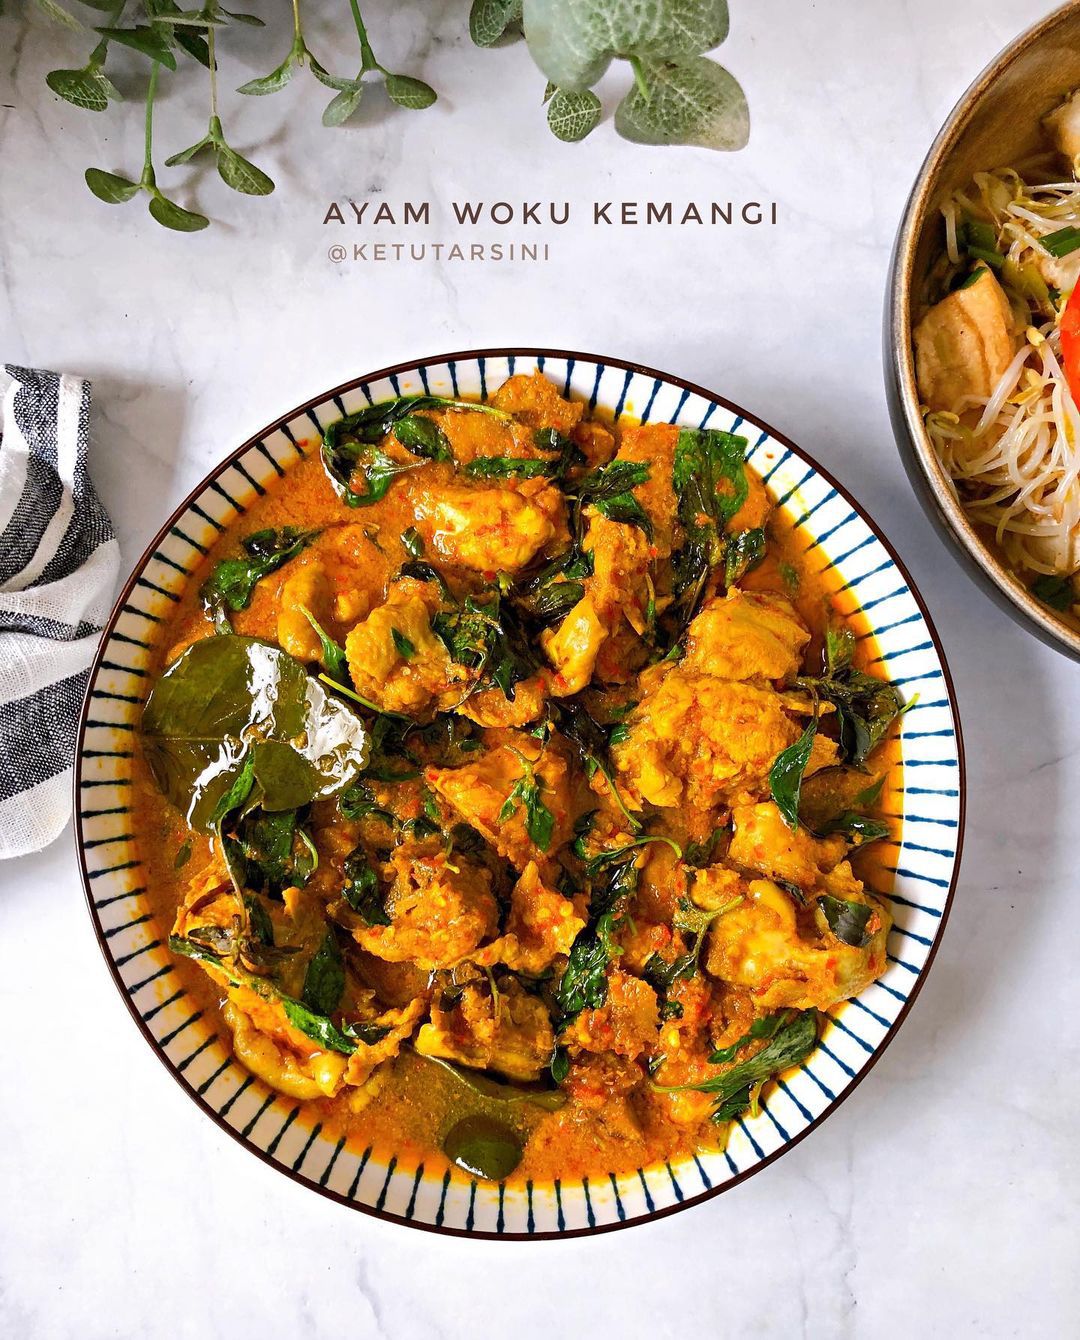 Resep Ayam Woku Kemangi untuk Masakan Sederhana Sehari-hari